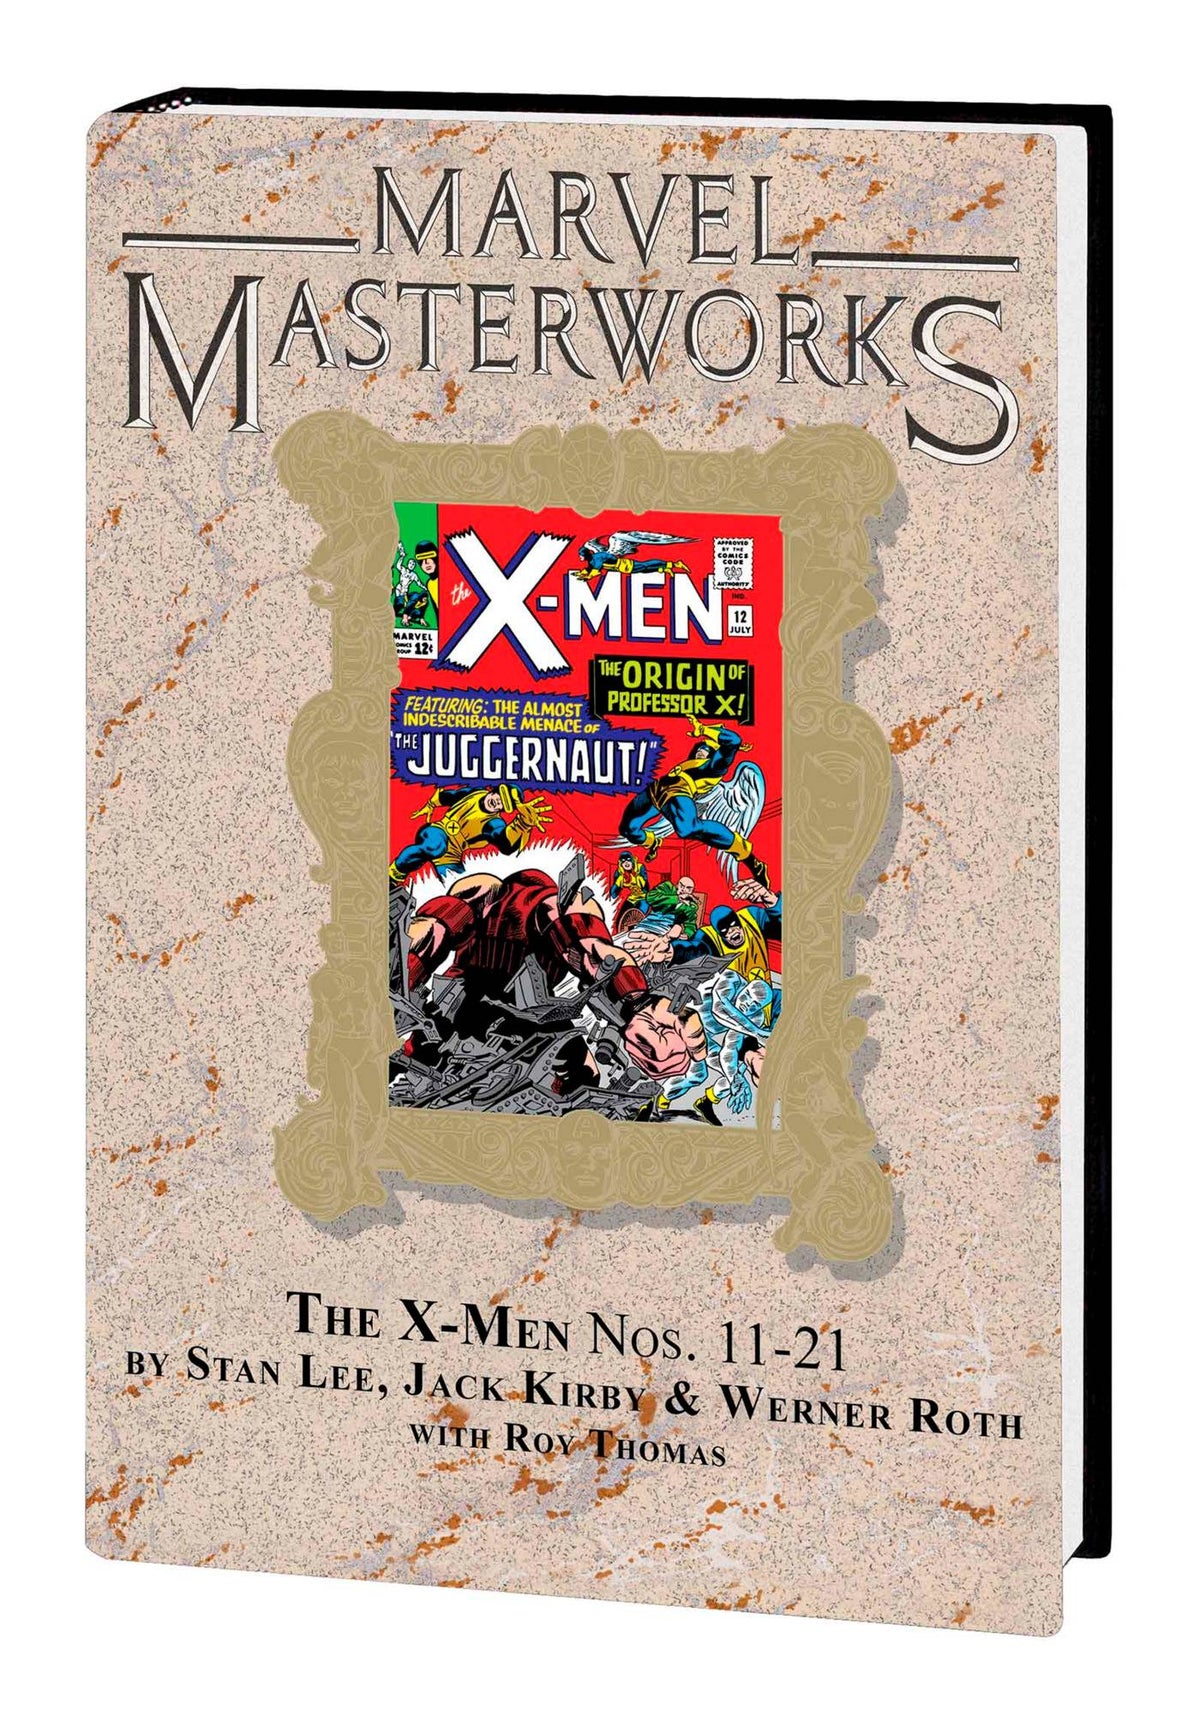 Mmw X-Men Hc Vol 02 Dm Var Remasterworks - State of Comics